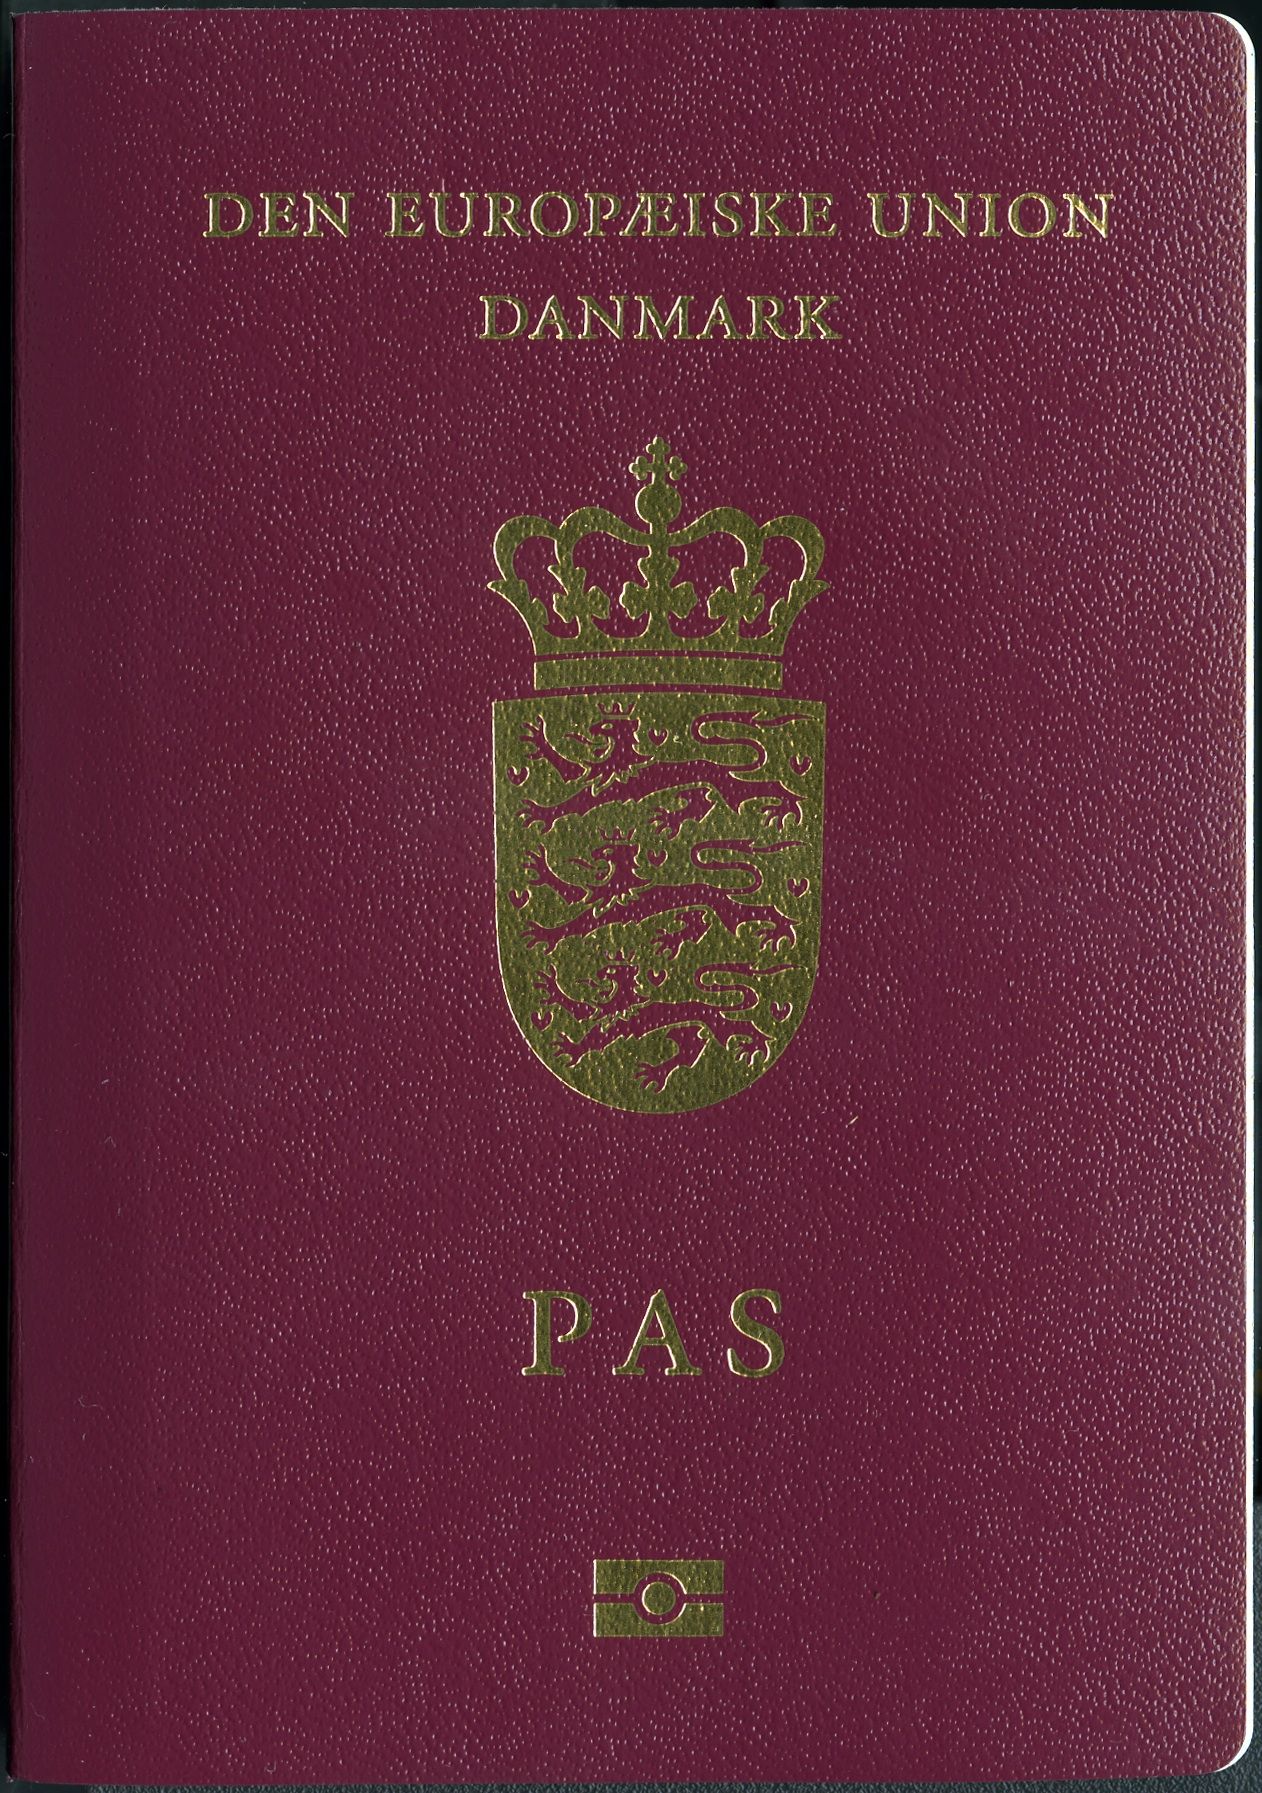 Danish passport still opening more doors than most